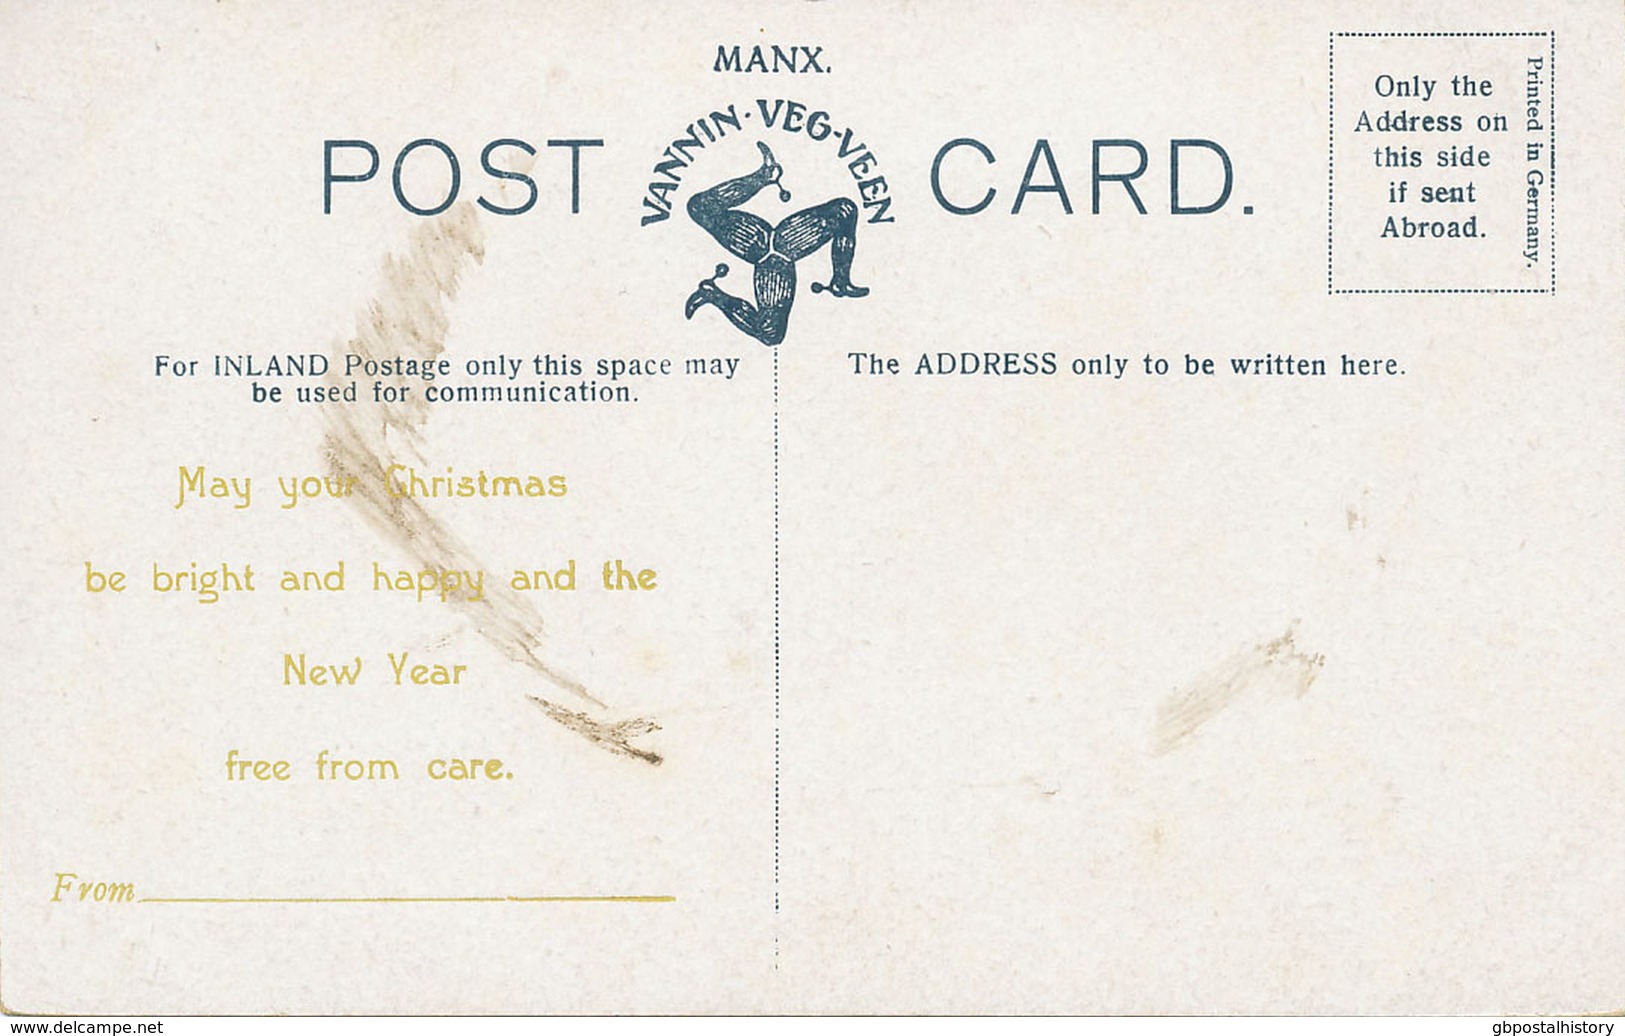 UK BRADDAN, Ca. 1910, Very Fine Mint Coloured Postcard "Sunday Service At Braddan", On The Backside Christmas Wishes - Ile De Man